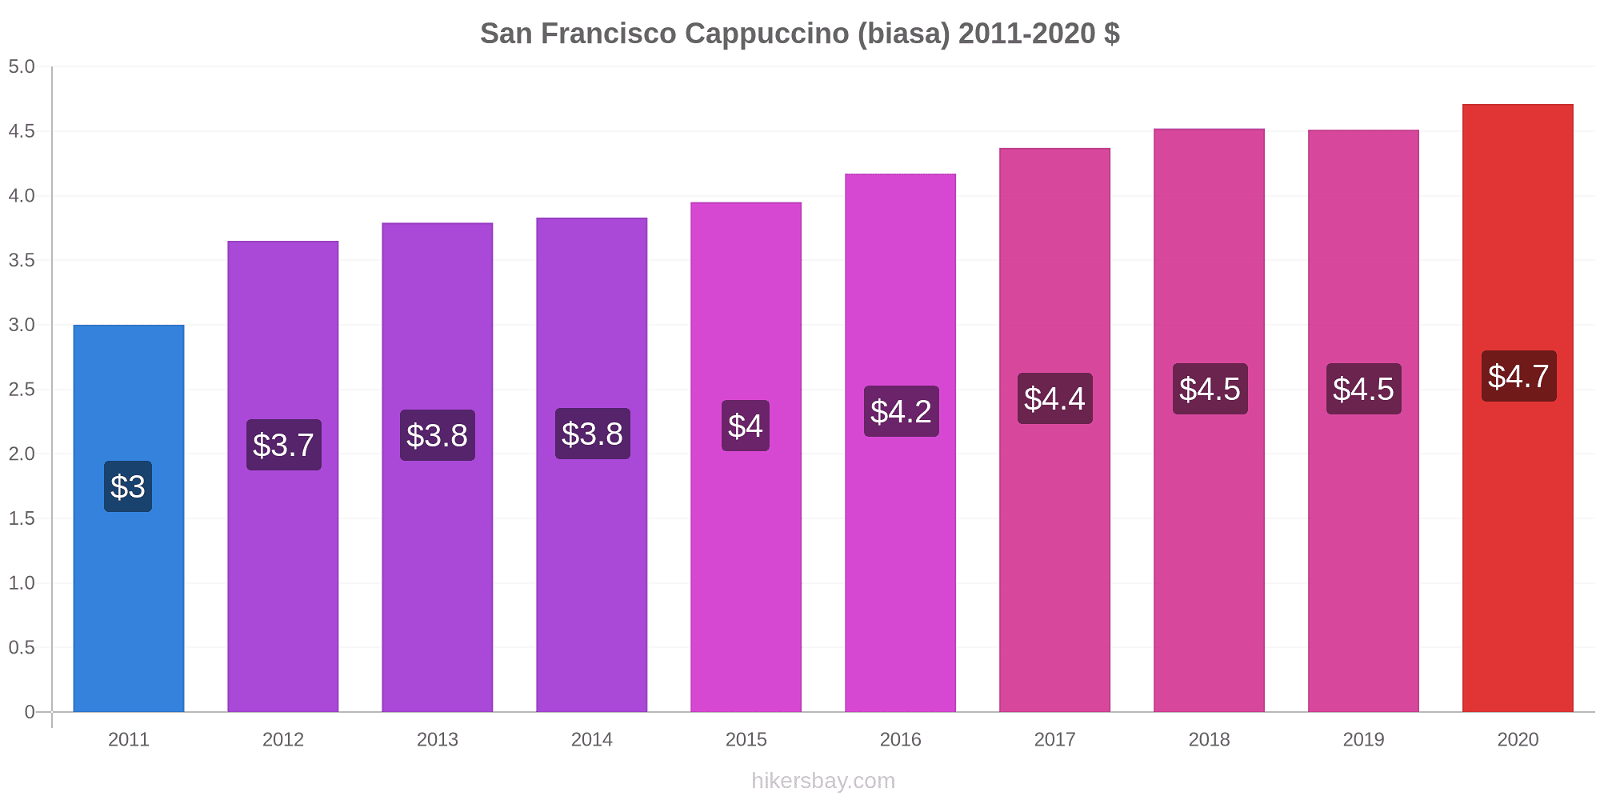 San Francisco perubahan harga Cappuccino (biasa) hikersbay.com